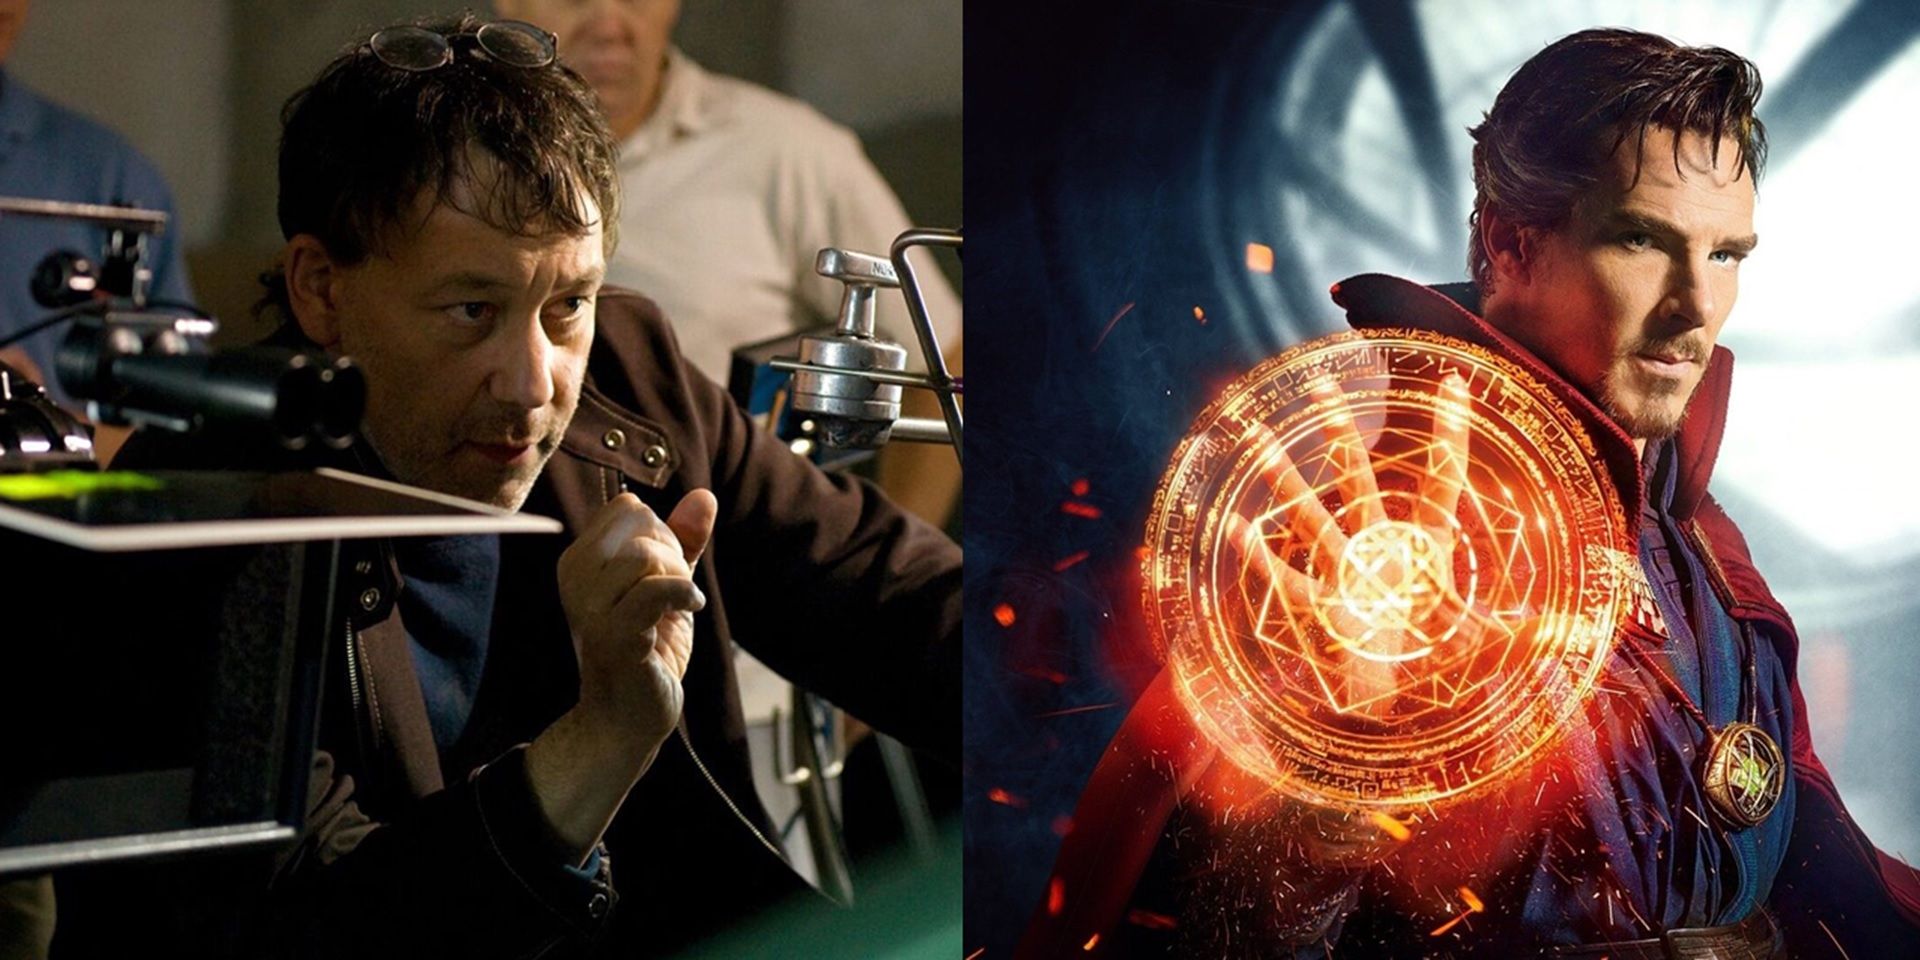 Sam Raimi directing/Doctor Strange using magic